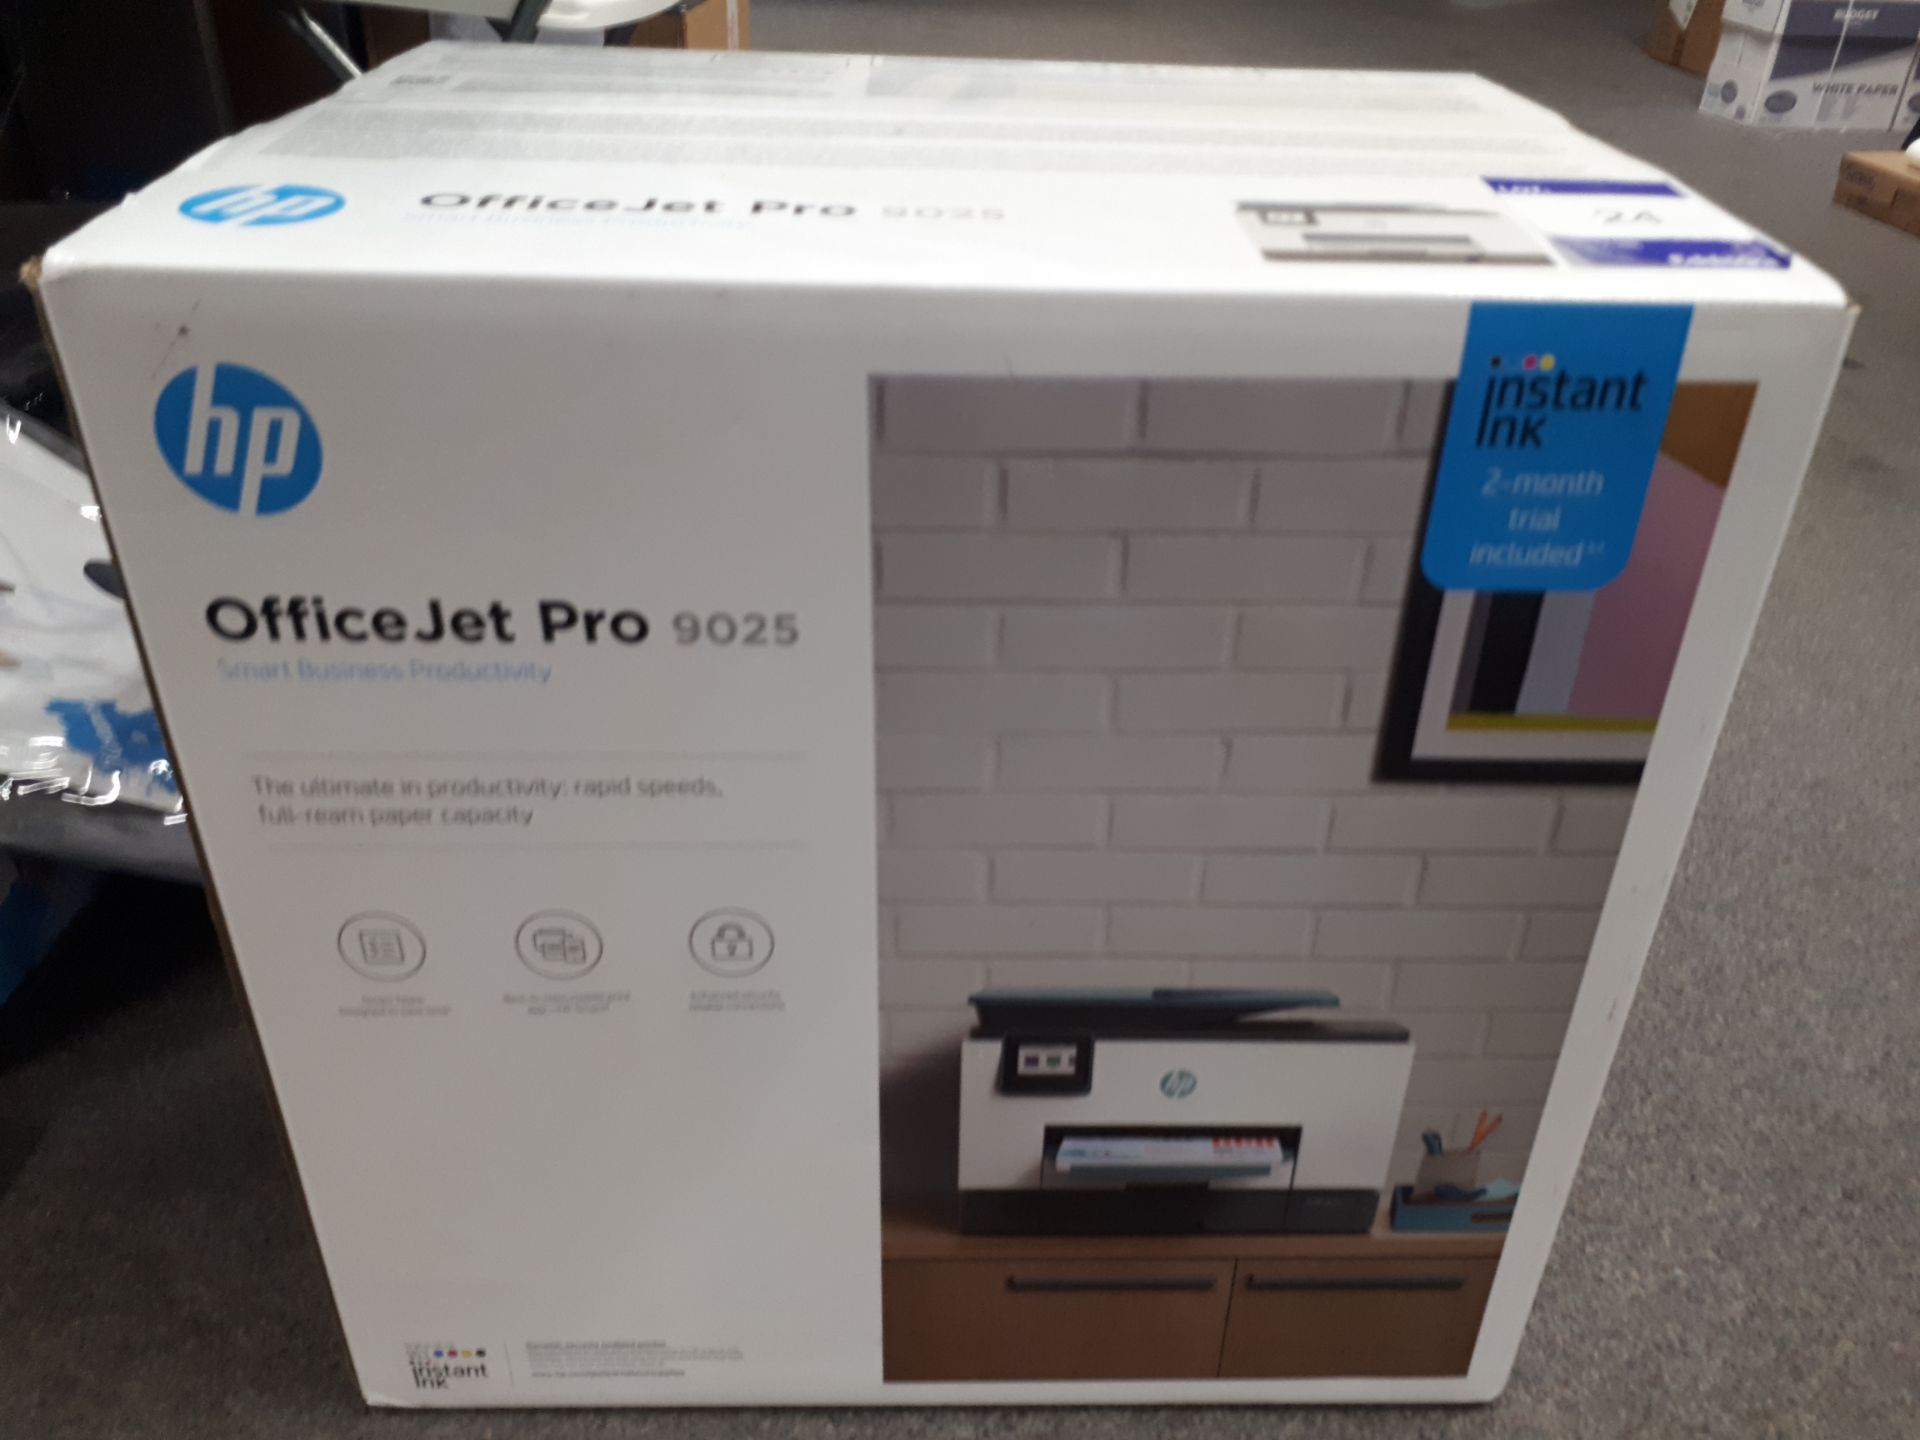 HP Officejet Pro 9025 printer, boxed